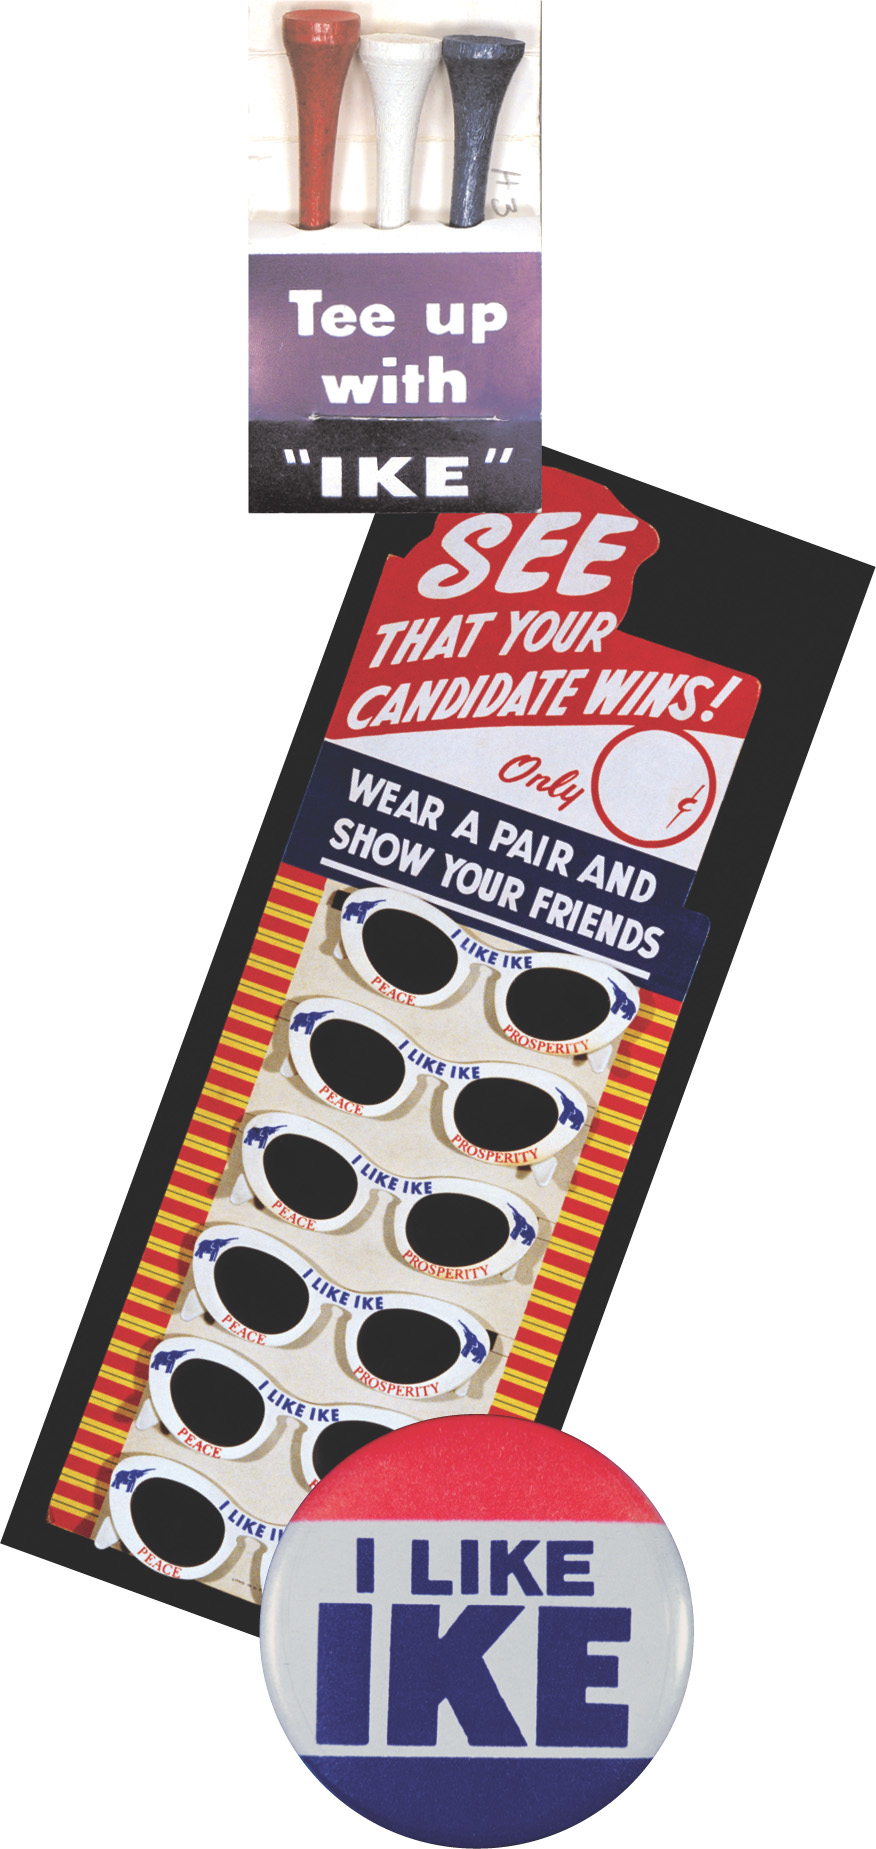 Photo: Ike campaign accessories - golf tees, sunglasses, and a button reading I like Ike